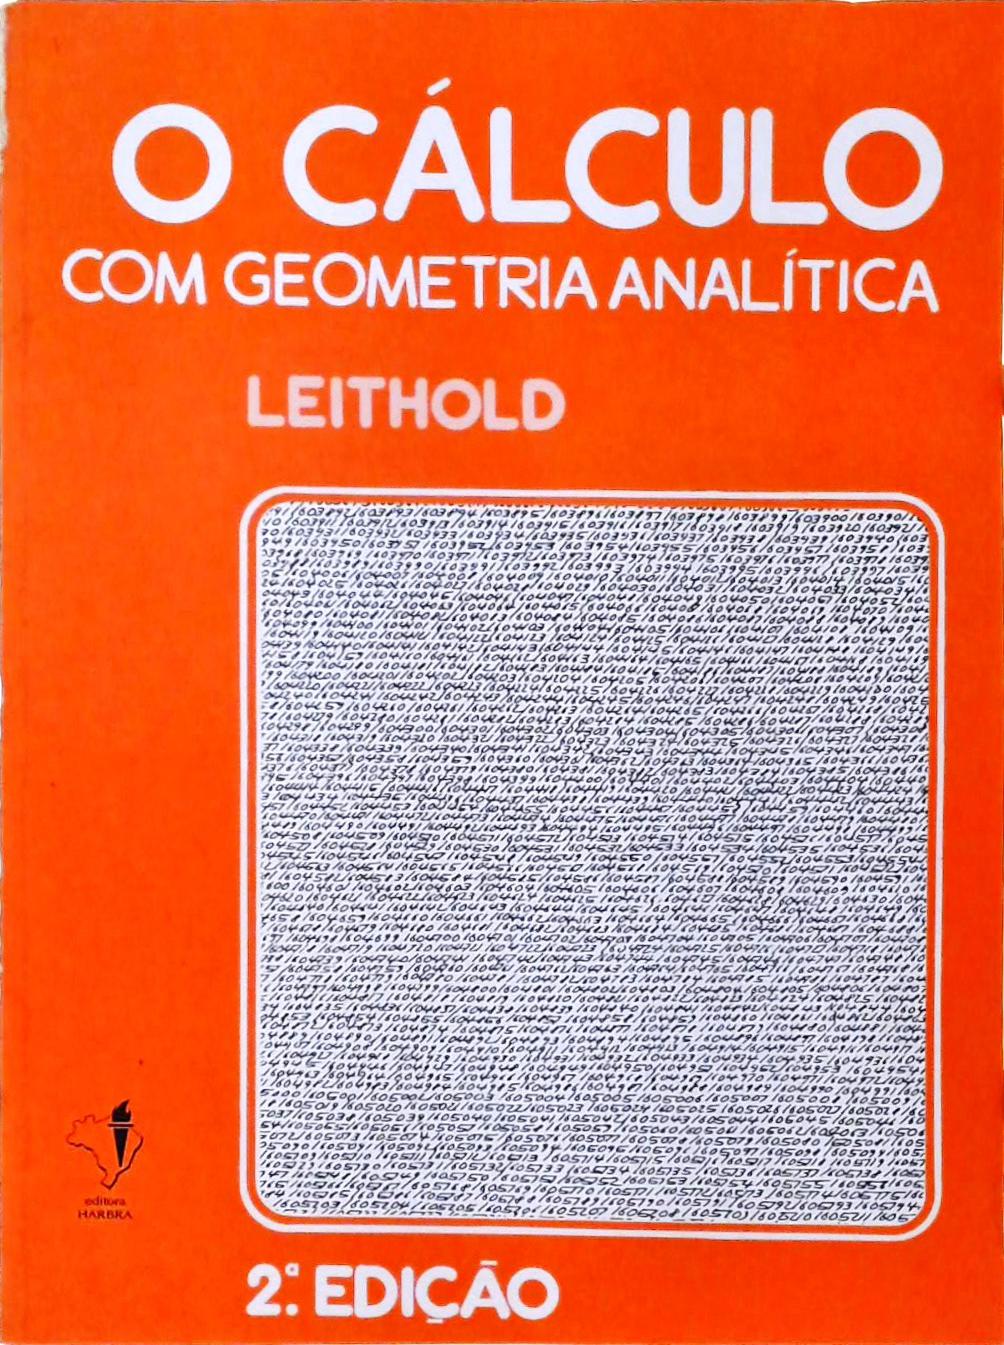 O Cálculo Vol. 1 (1982)